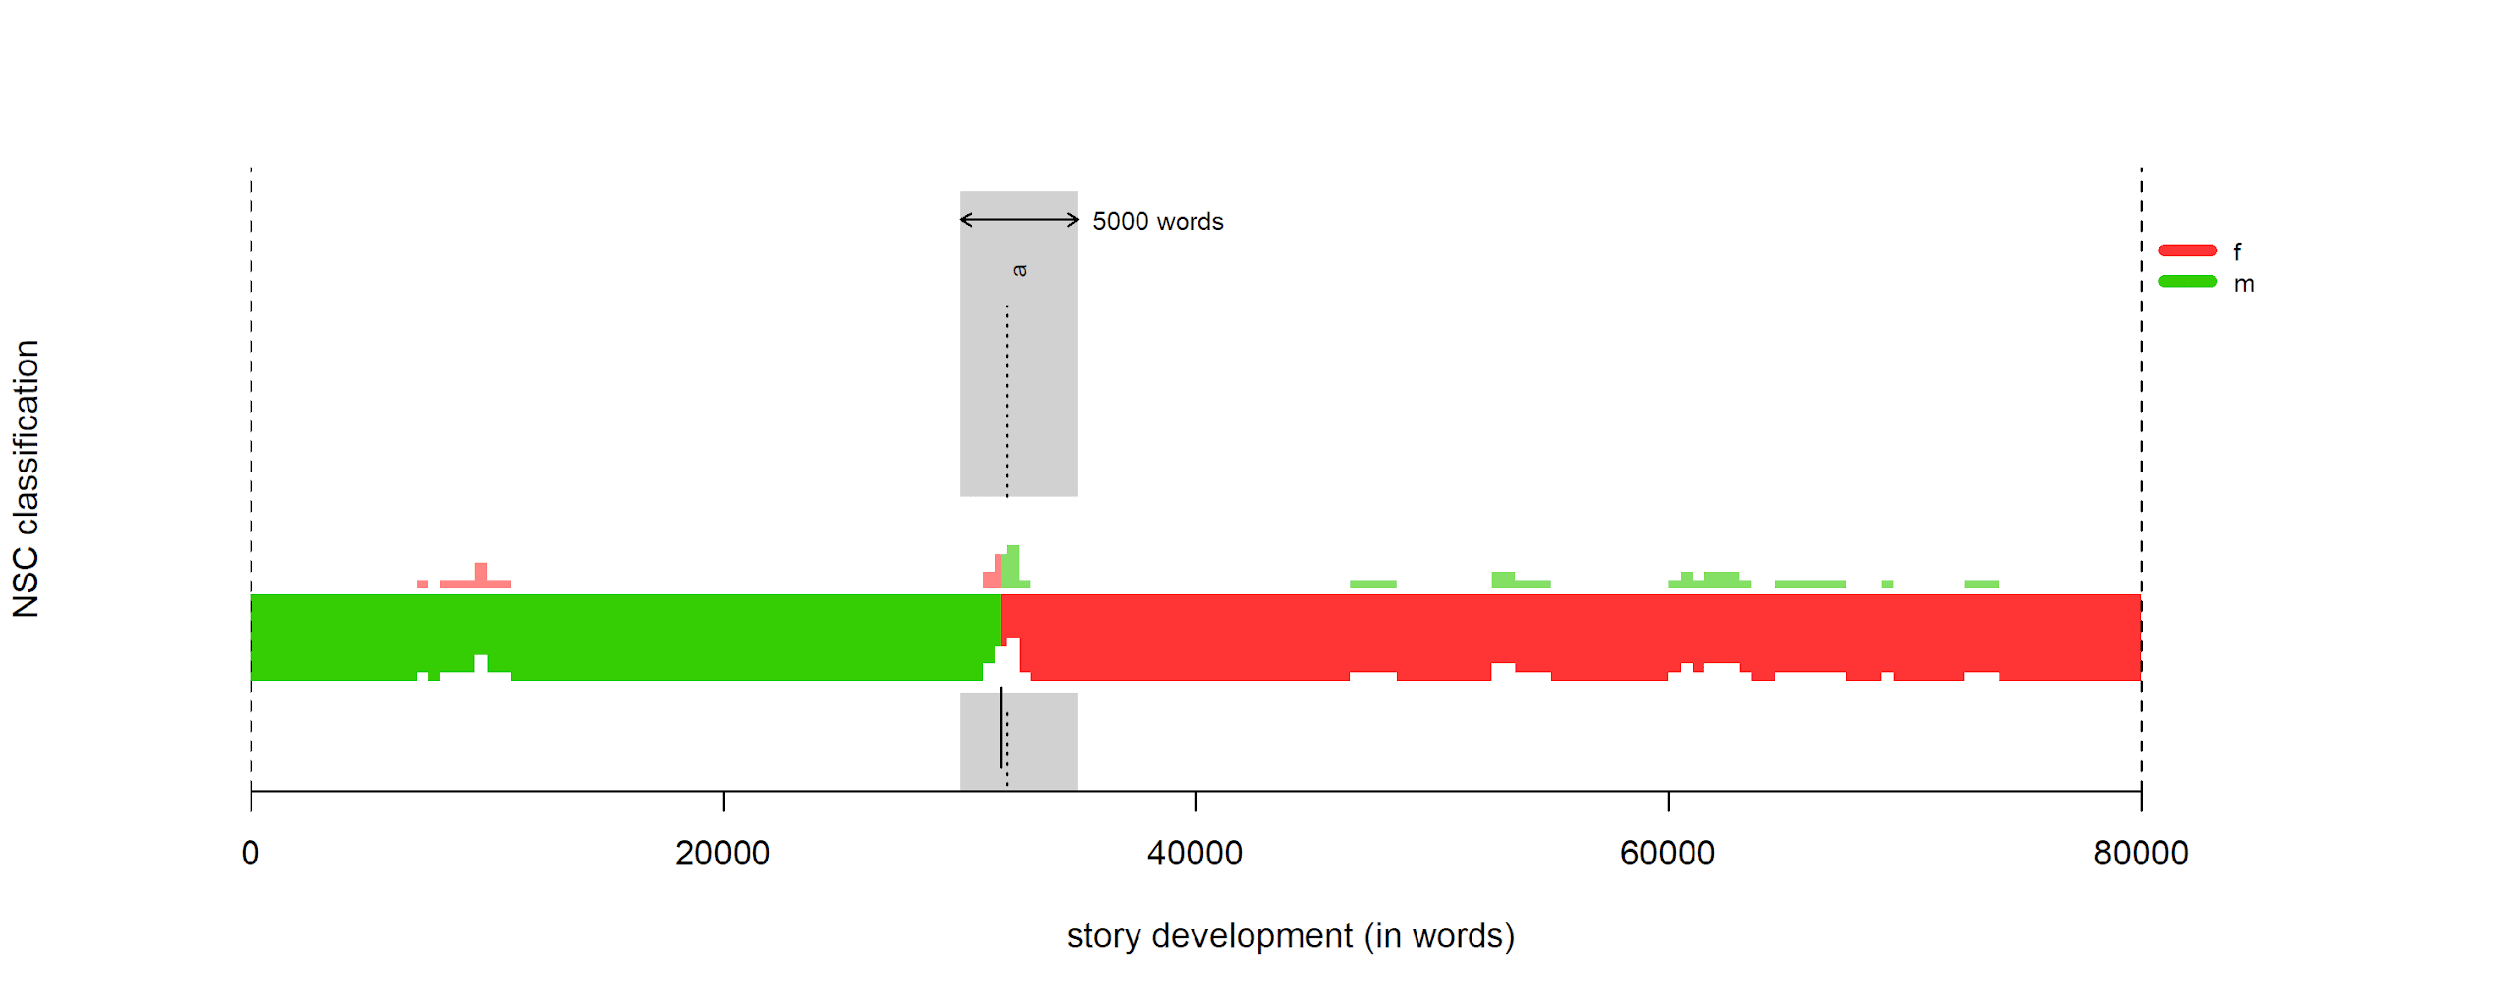 Image of a bar graph